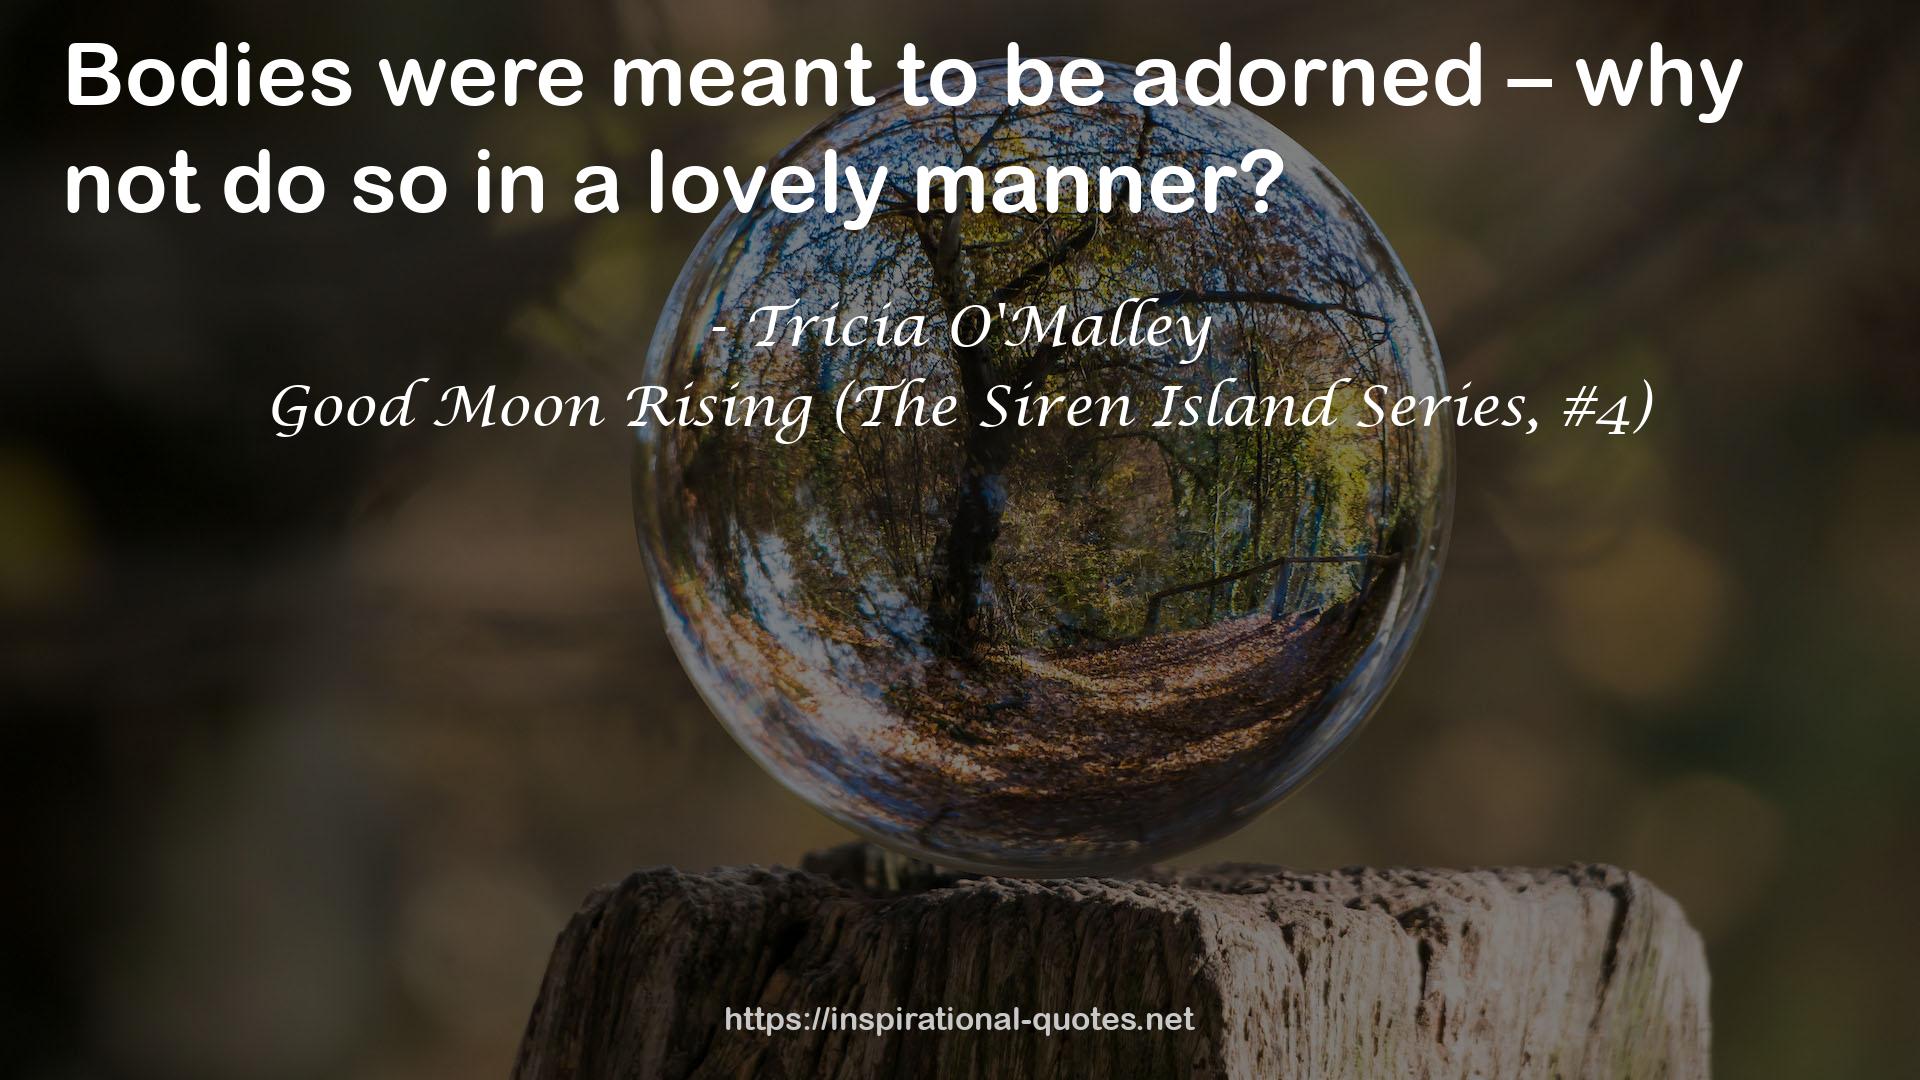 Good Moon Rising (The Siren Island Series, #4) QUOTES